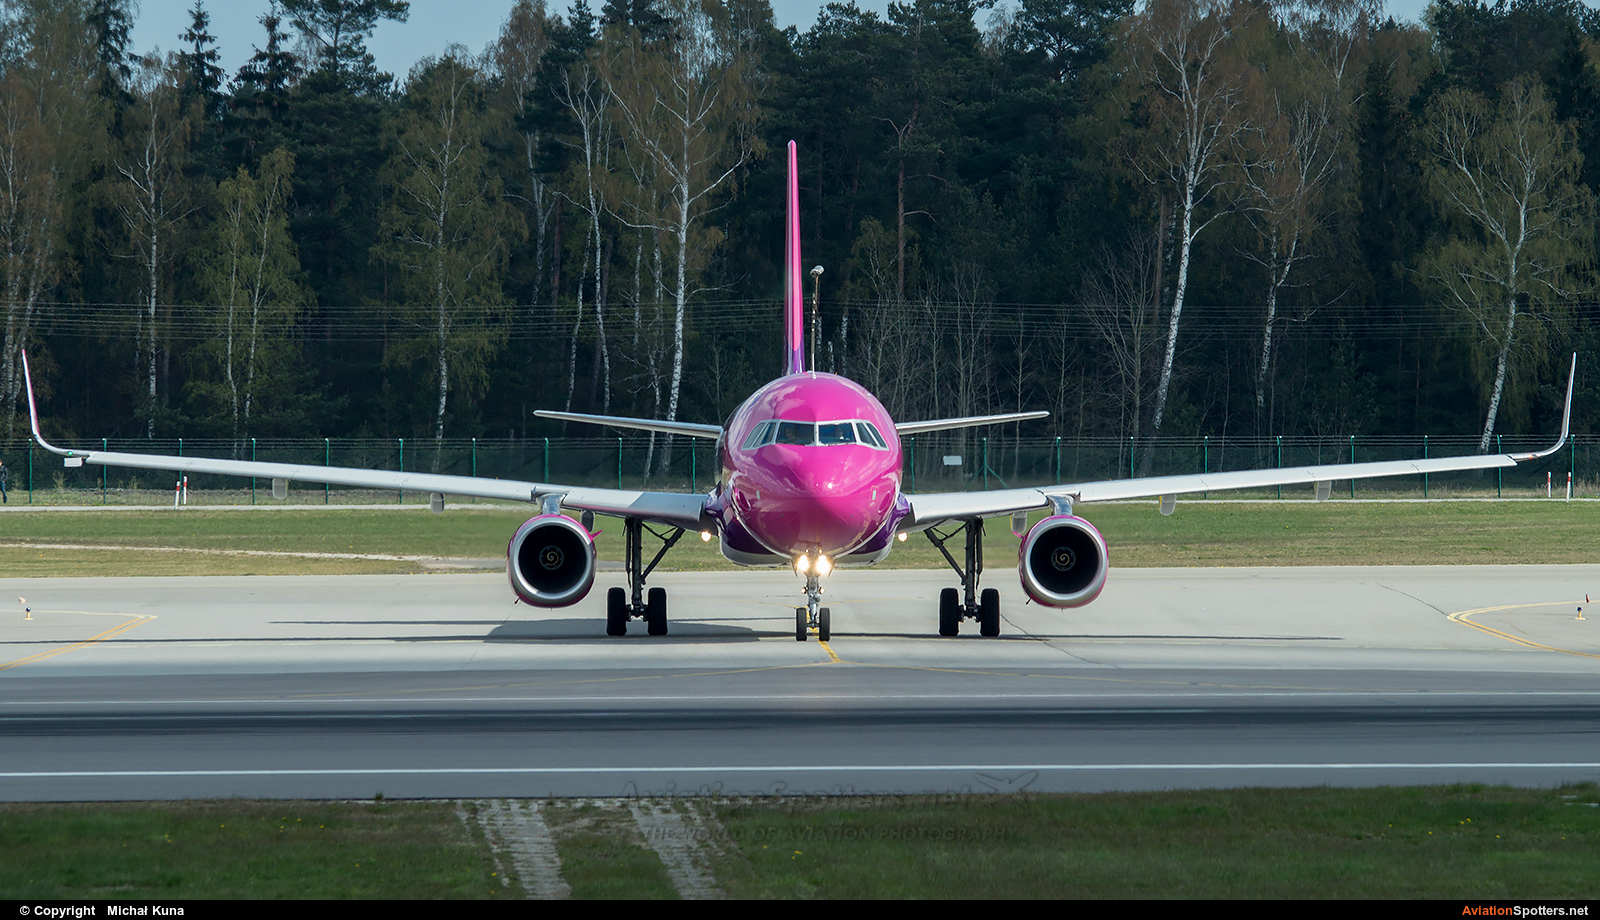 Wizz Air  -  A320-232  (HA-LYL) By Michał Kuna (big)